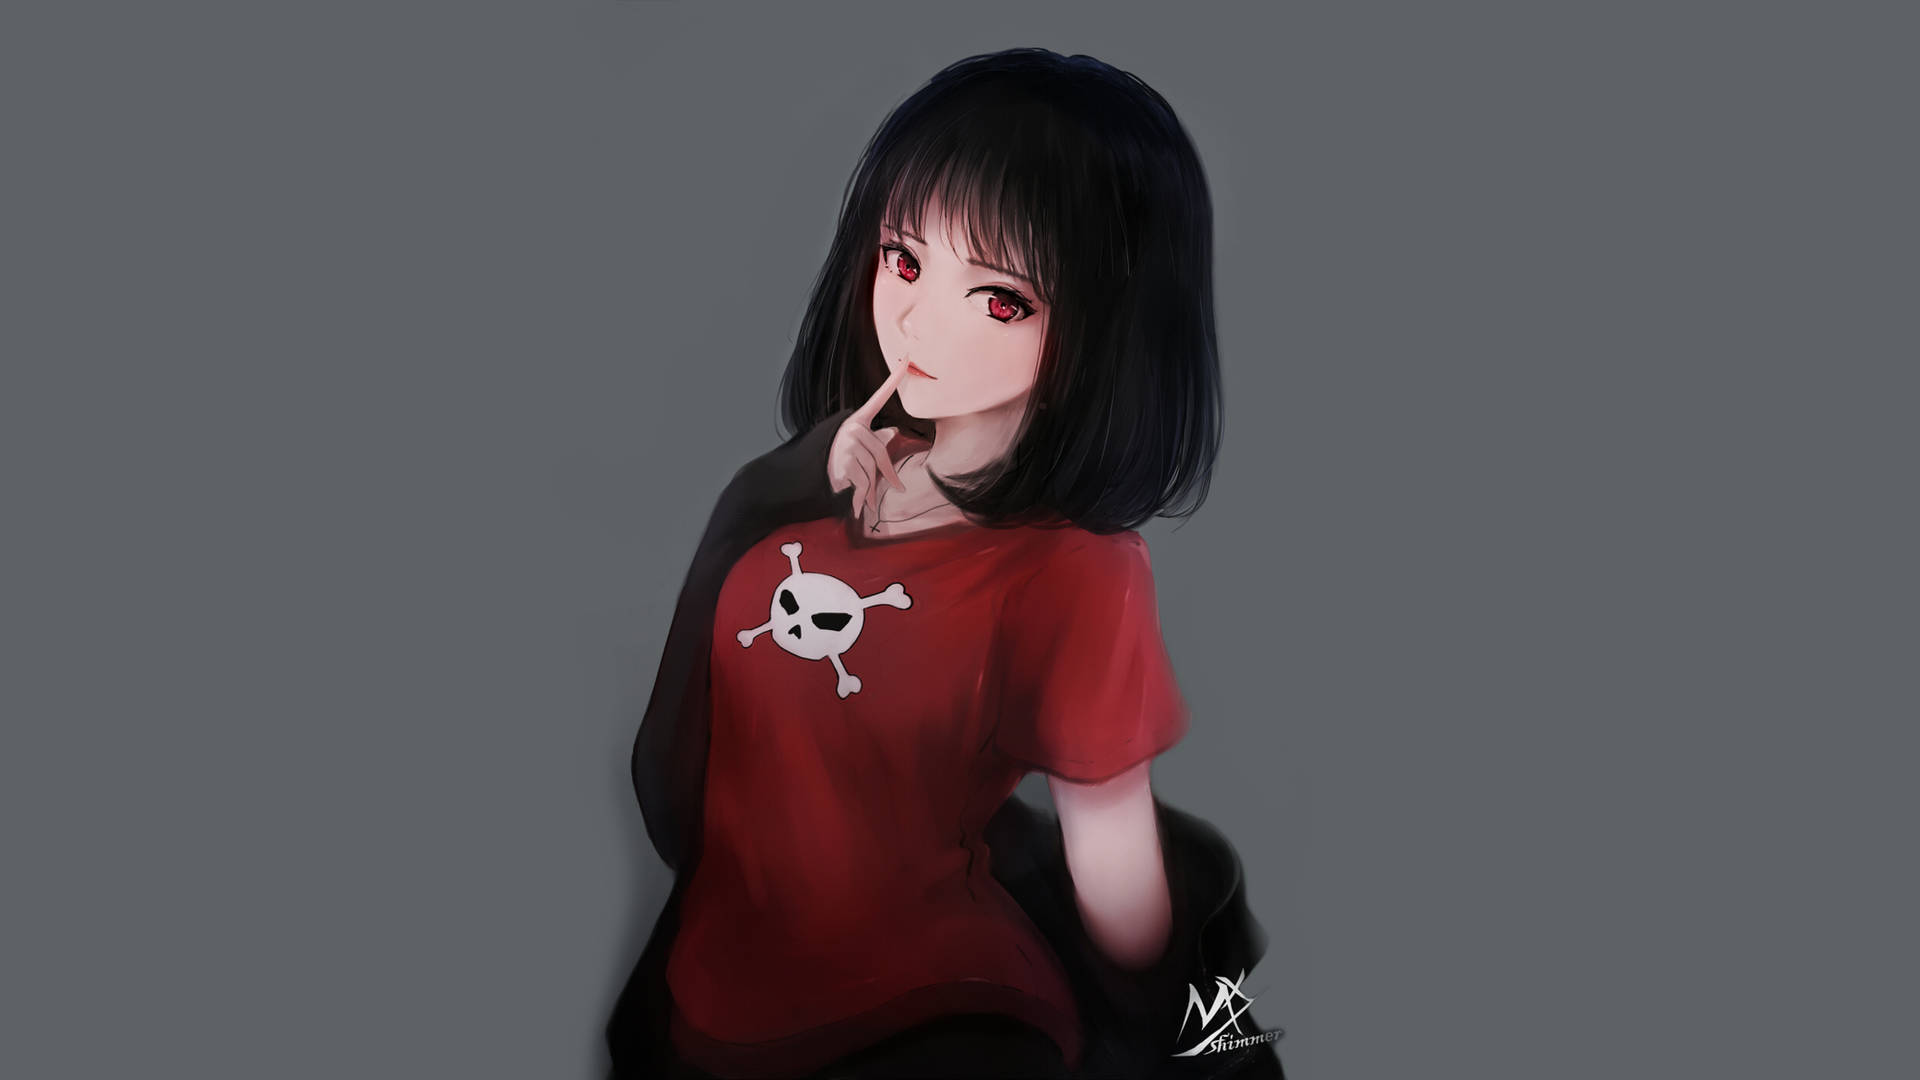 Aesthetic Anime Girl On Grey Pfp Background